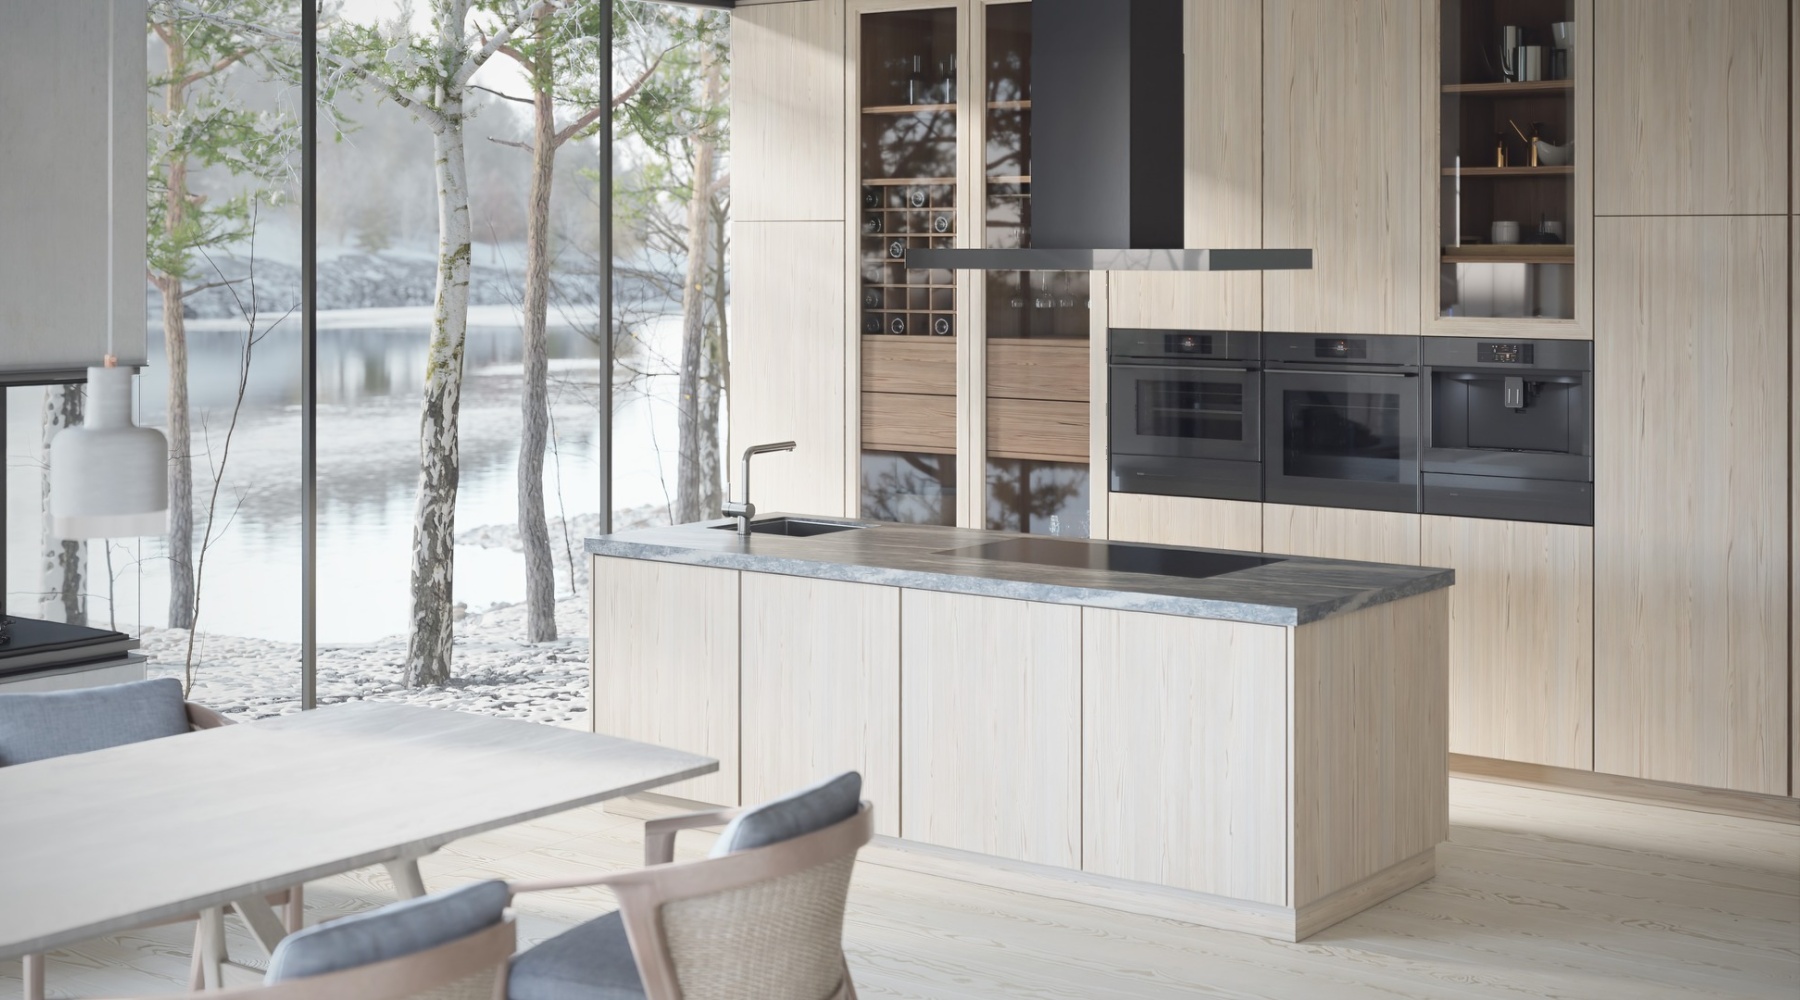 asko-amb-kitchen-conceptual-image-grey-elements-winter.jpg